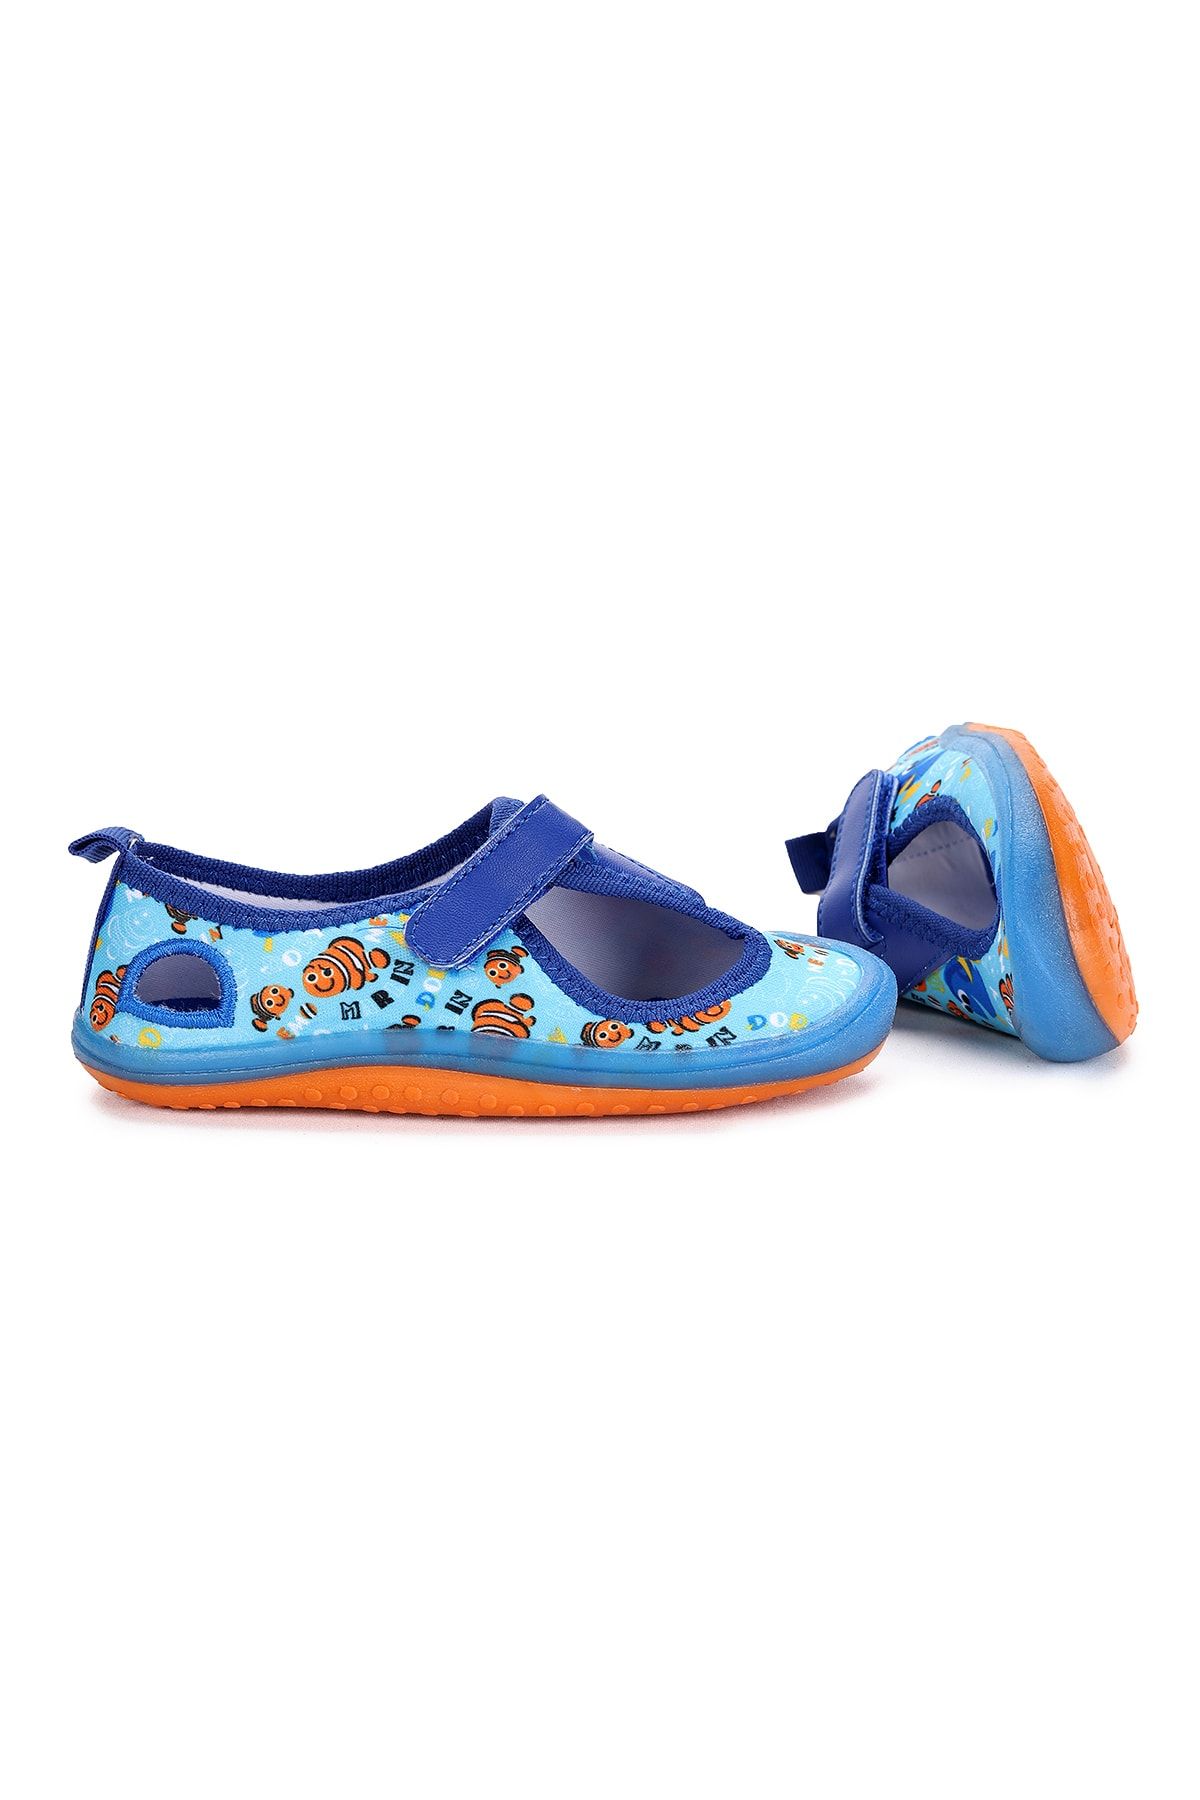 Almues Kids 01 Aqua Erkek/kız Çocuk Sandalet Panduf Ayakkabı